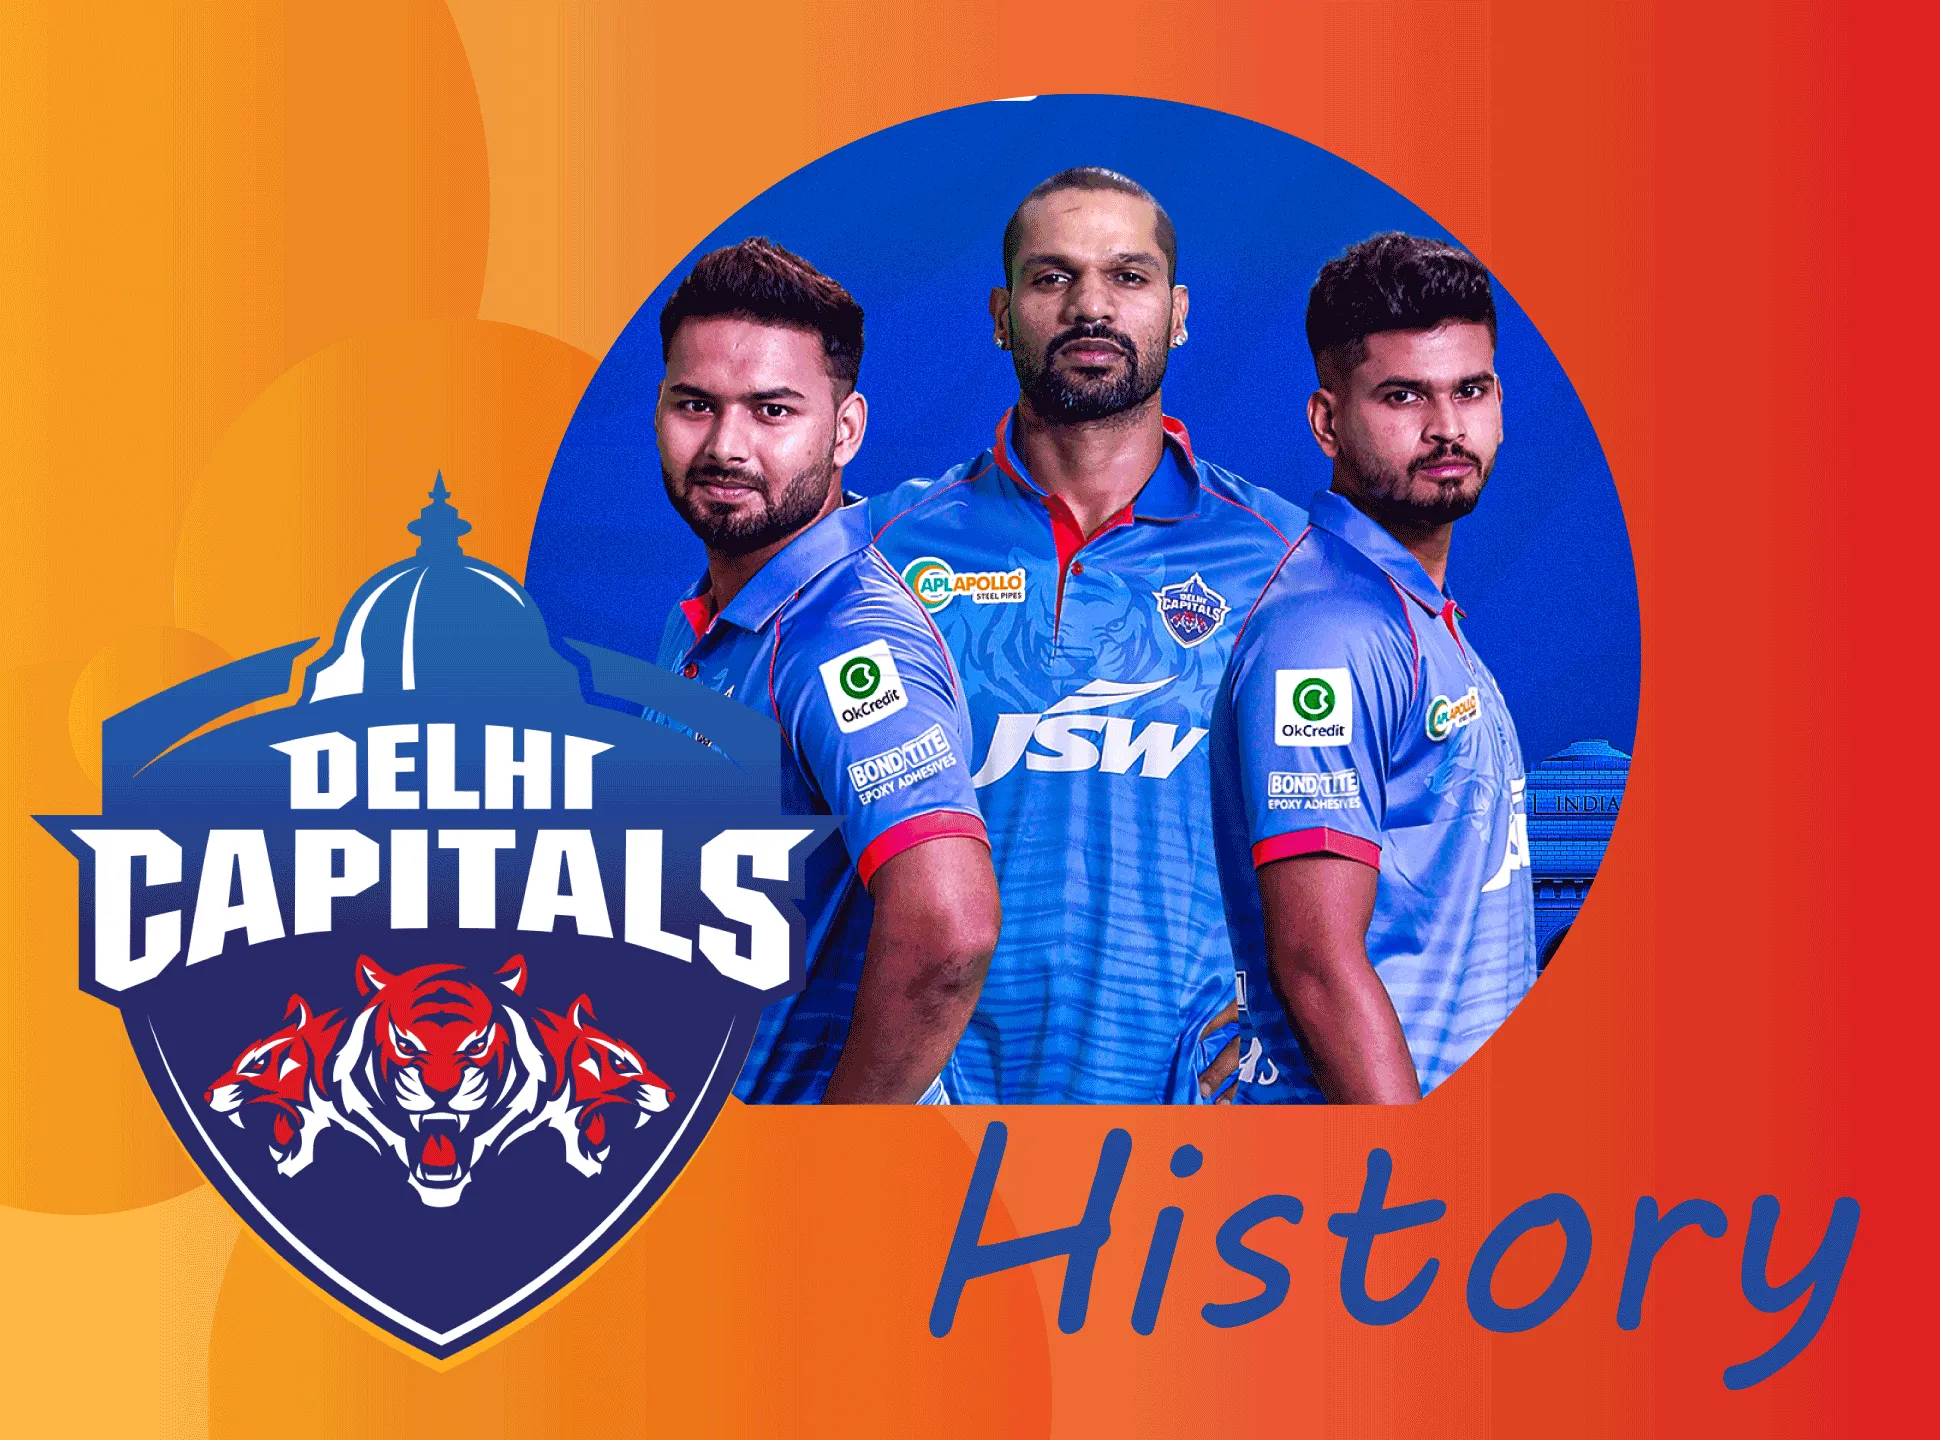 The history oh Delhi Capitals starts from 2008.